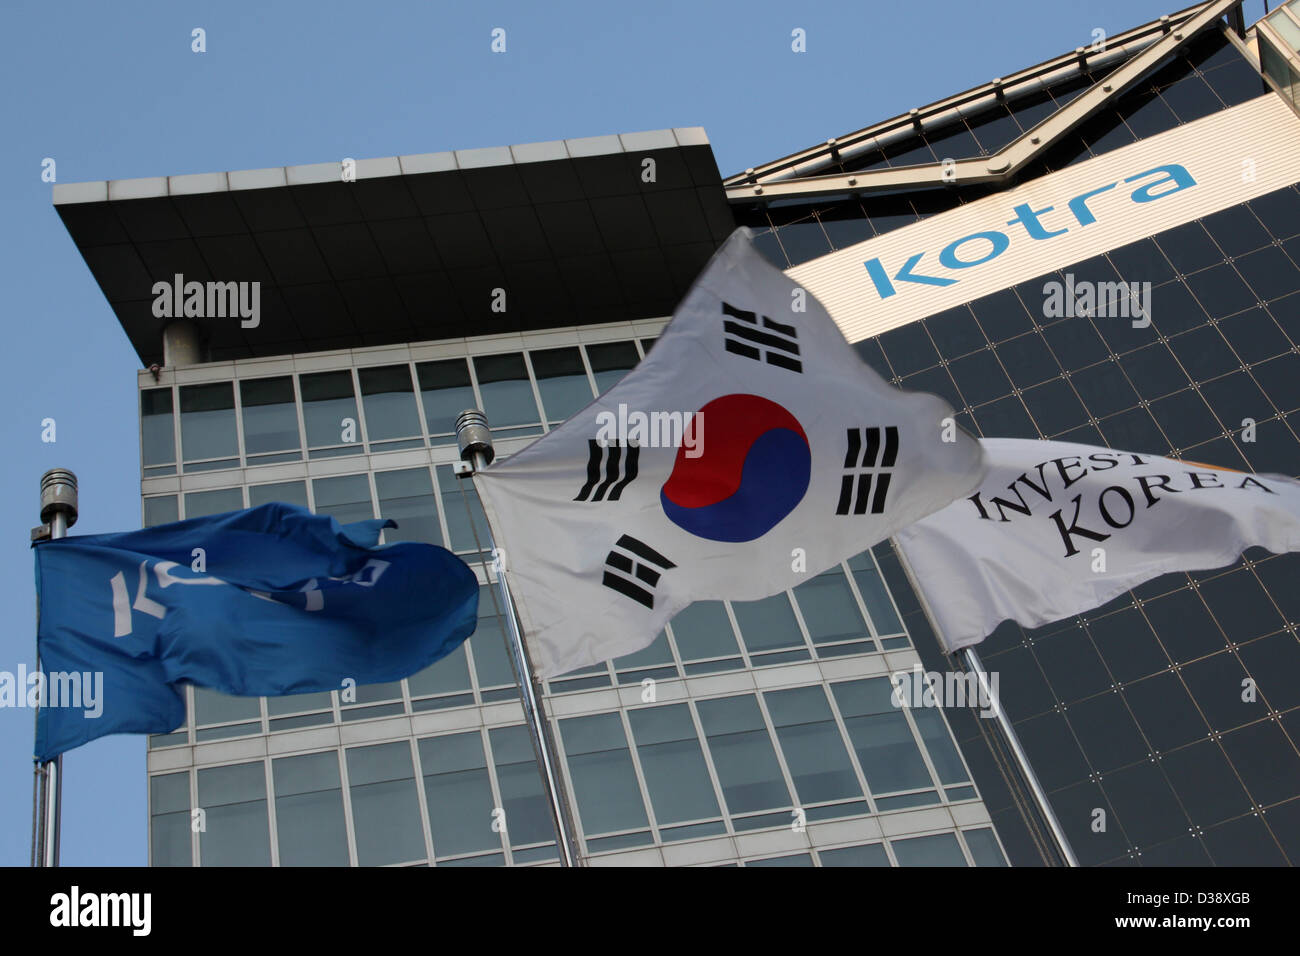 South Korea: KOTRA (Korea Trade Investment Promotion Agency) headquarter, Seoul Stock Photo